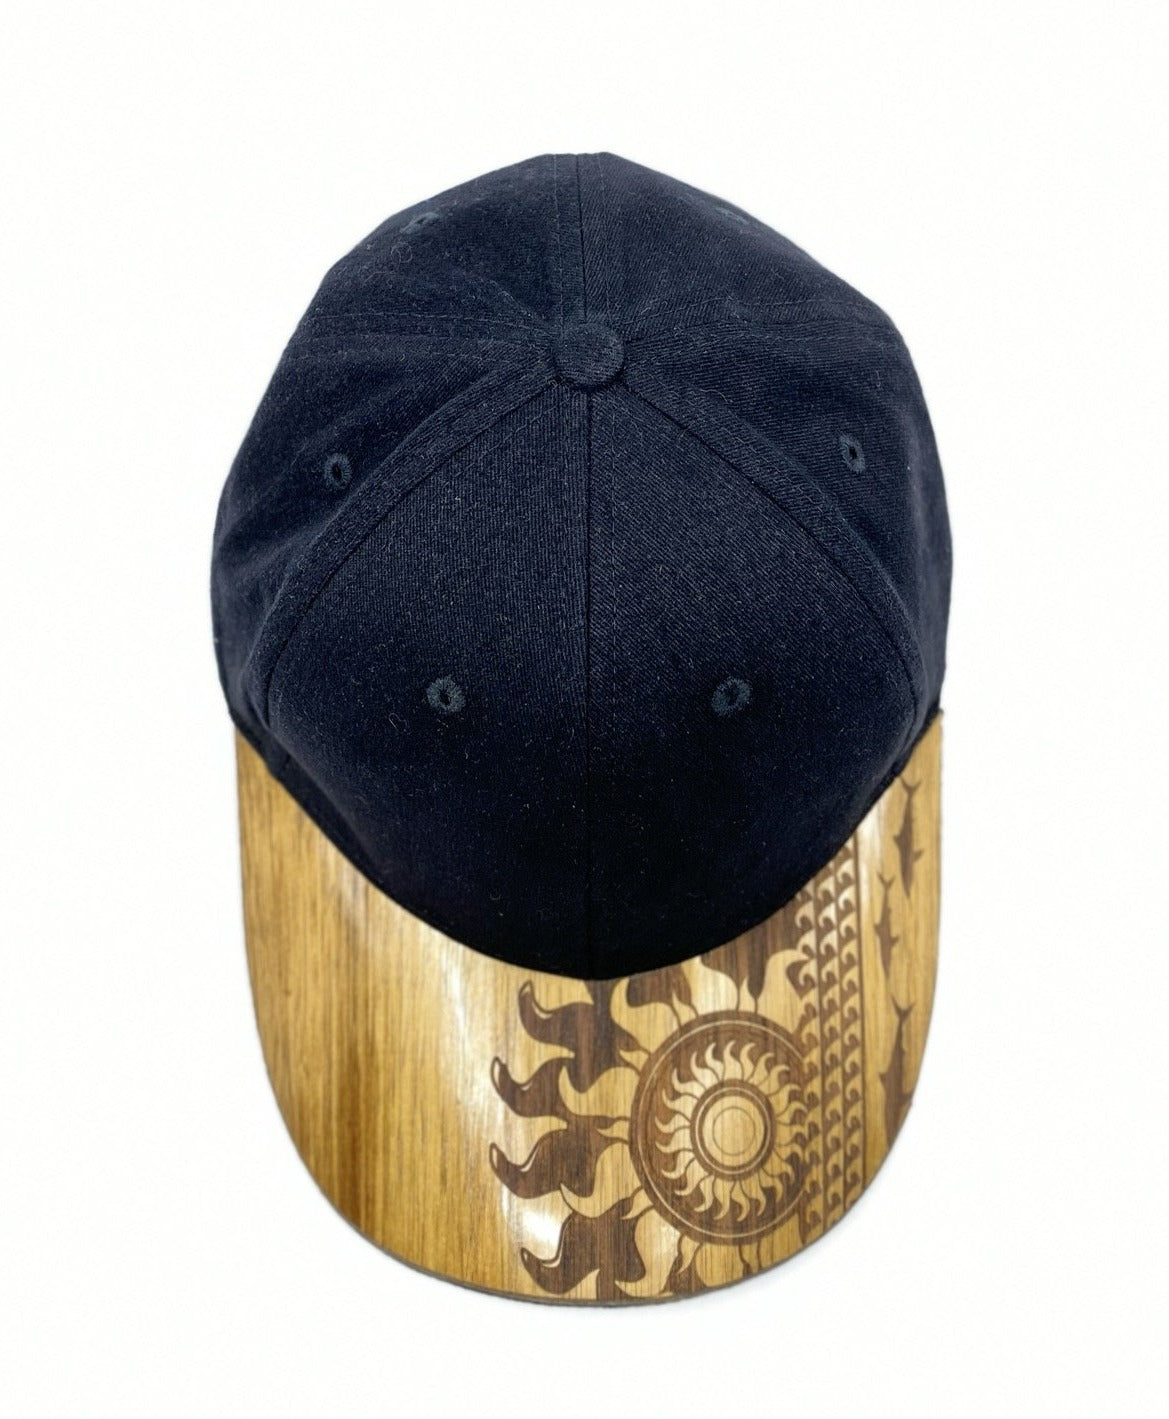 Sunshark Koa Wood Hat - Curved Bill